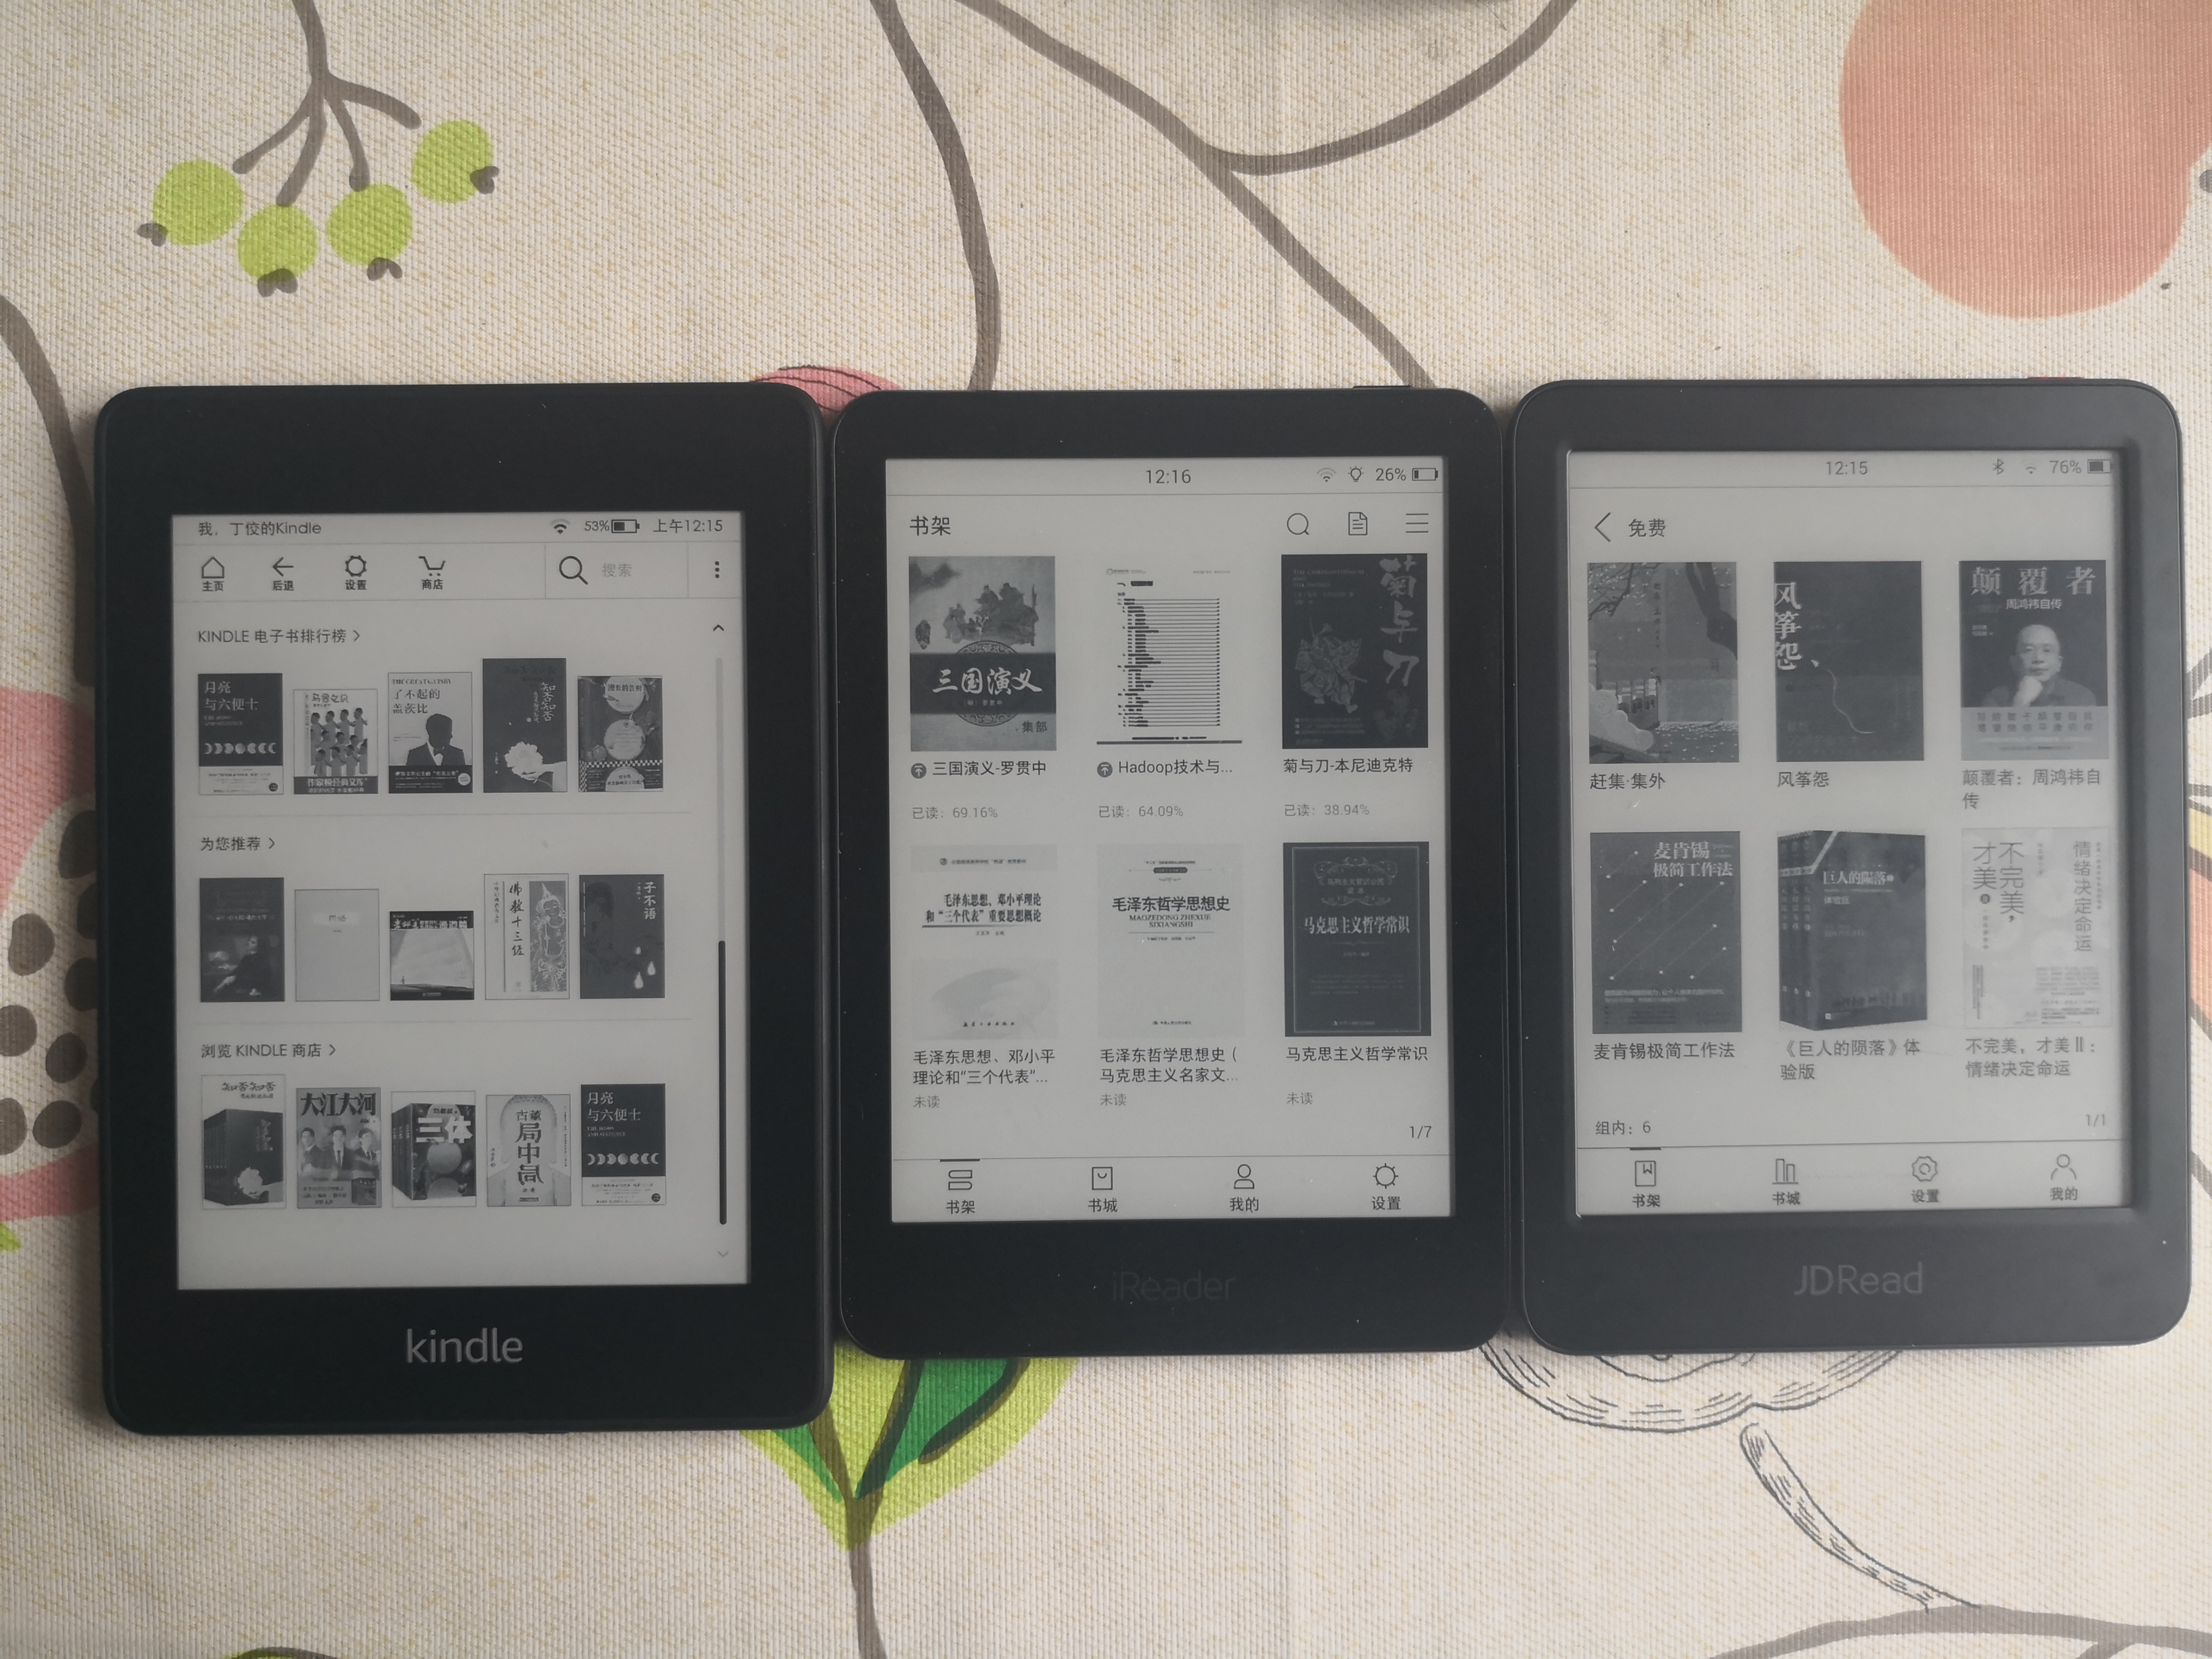 Kindle、iReader、JDReader 阅读 PDF 文档效果比较 